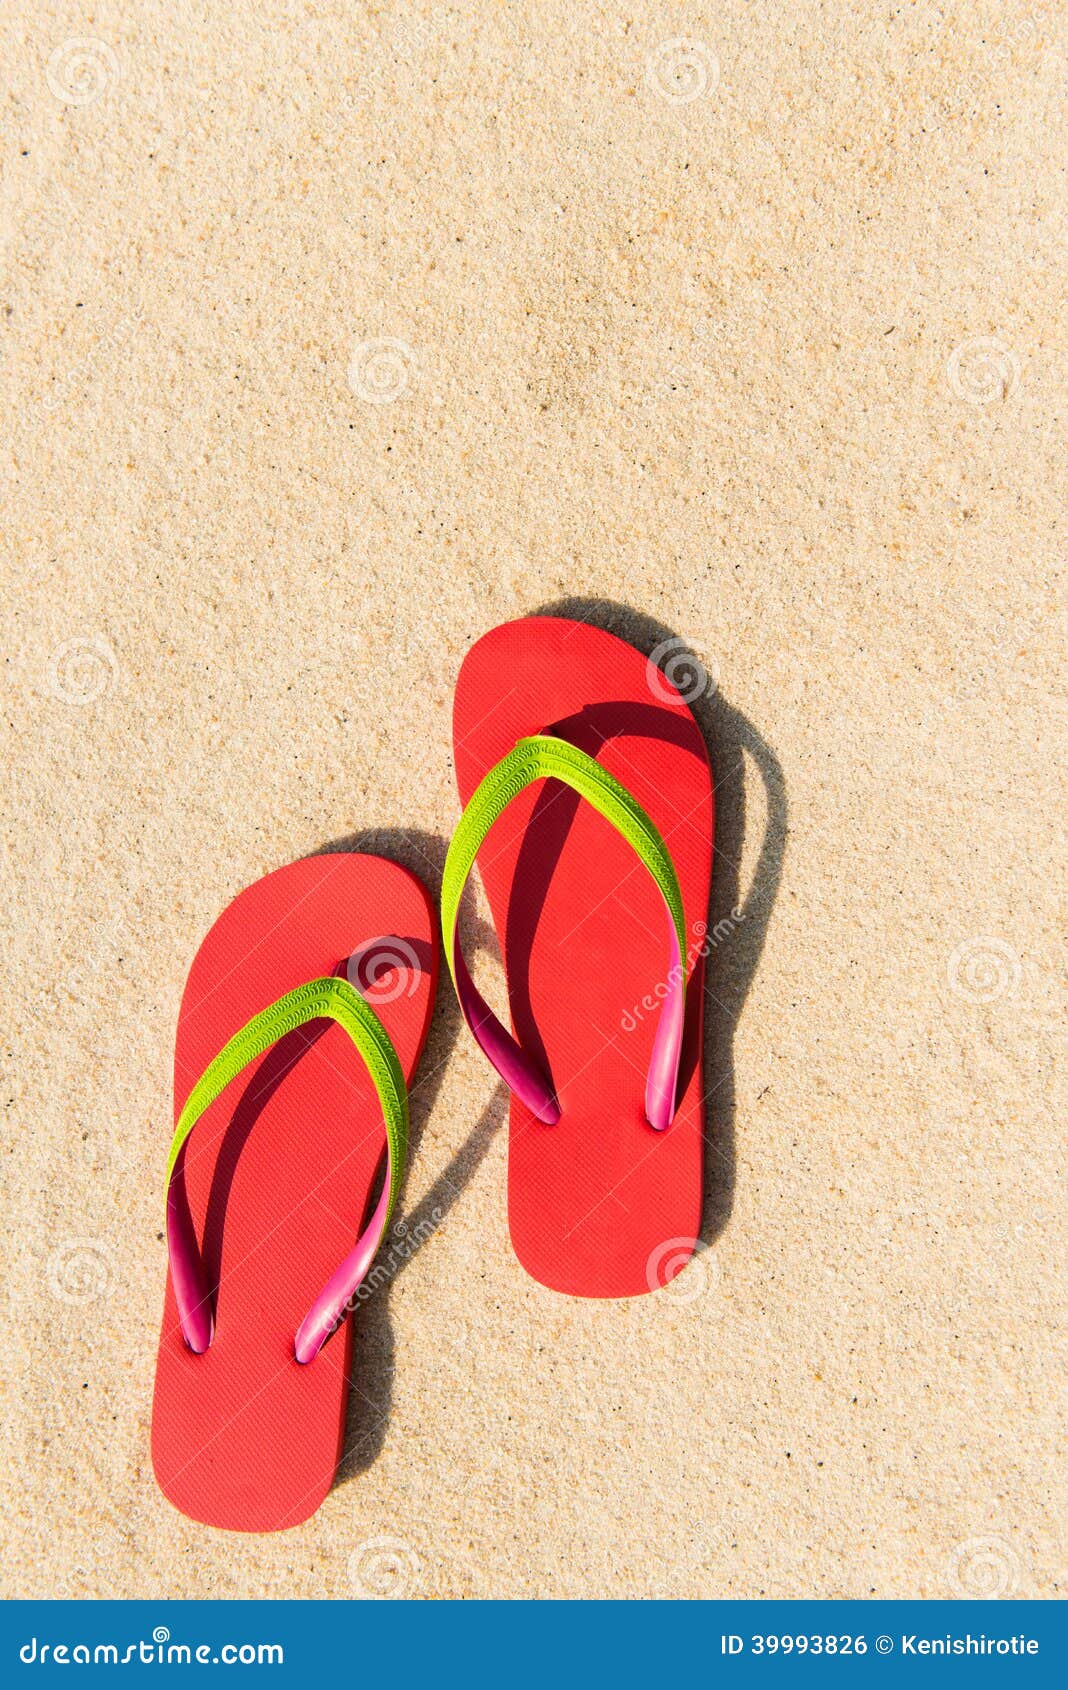 Flip flop on beach stock photo. Image of shoe, flip, casual - 39993826